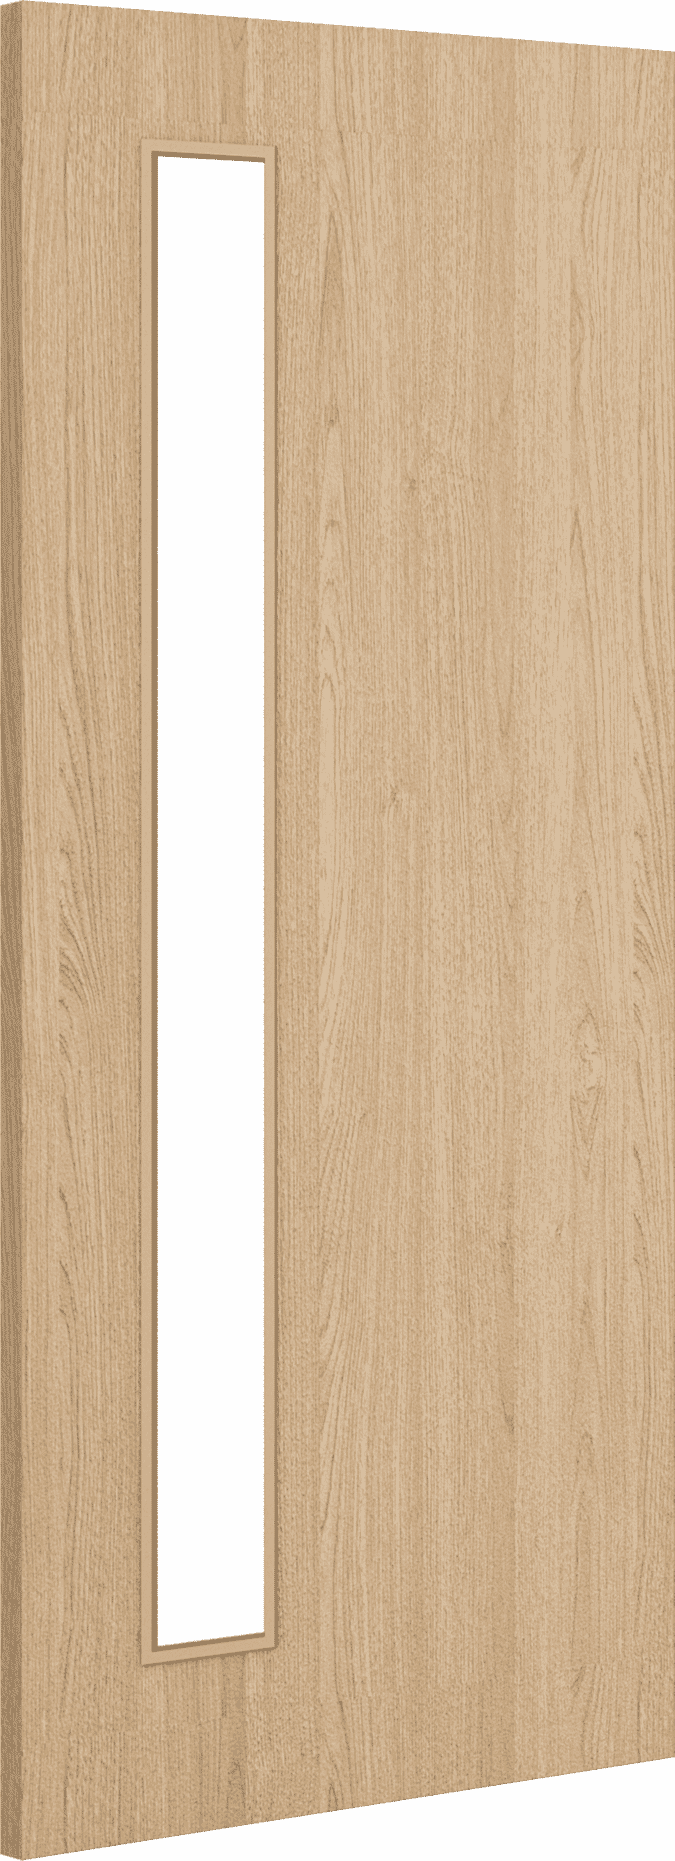 2040mm x 426mm x 44mm Architectural Oak 06 Frosted Glazed - Prefinished FD30 Fire Door Blank